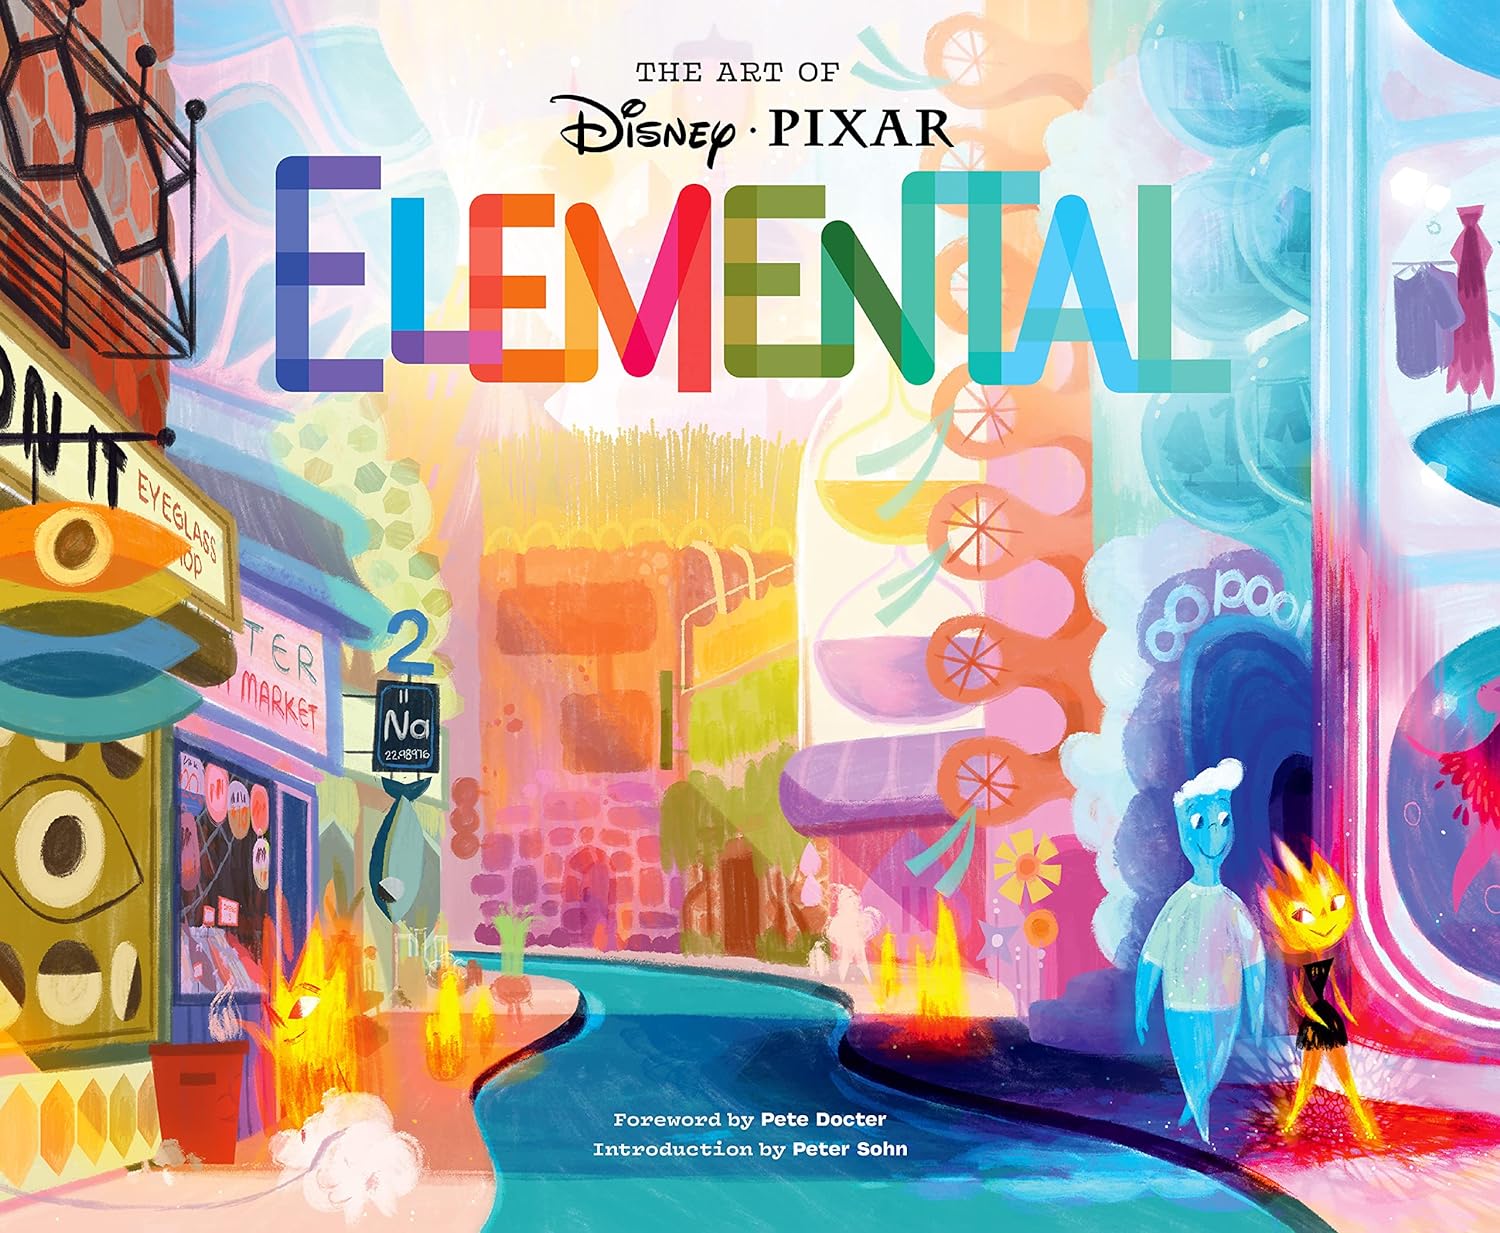 The Art of Elemental Disney pixar